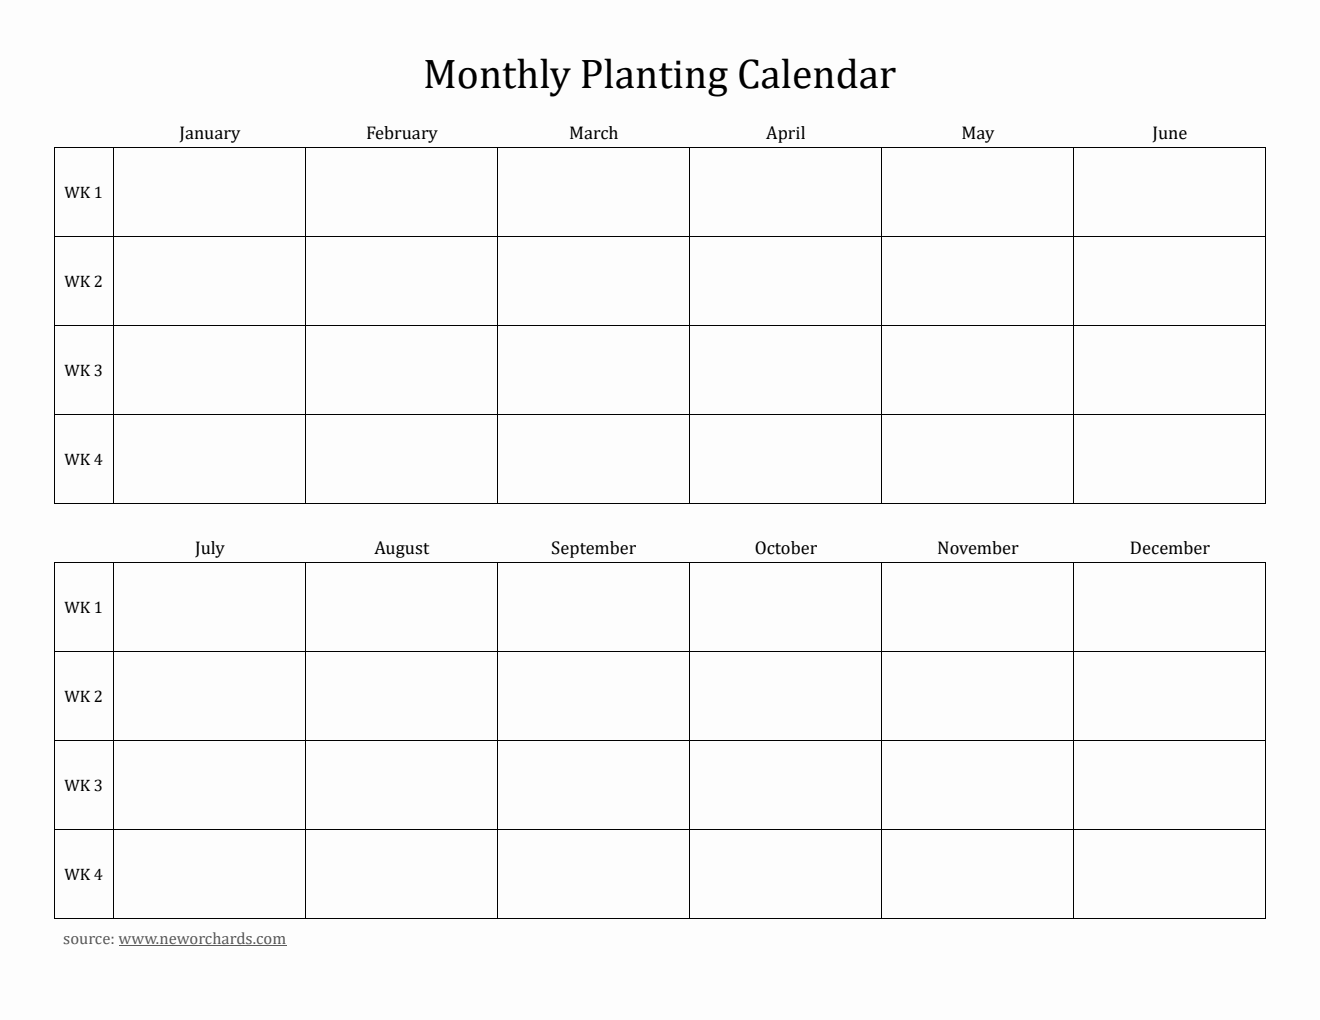 Blank Monthly Planting Calendar in Word